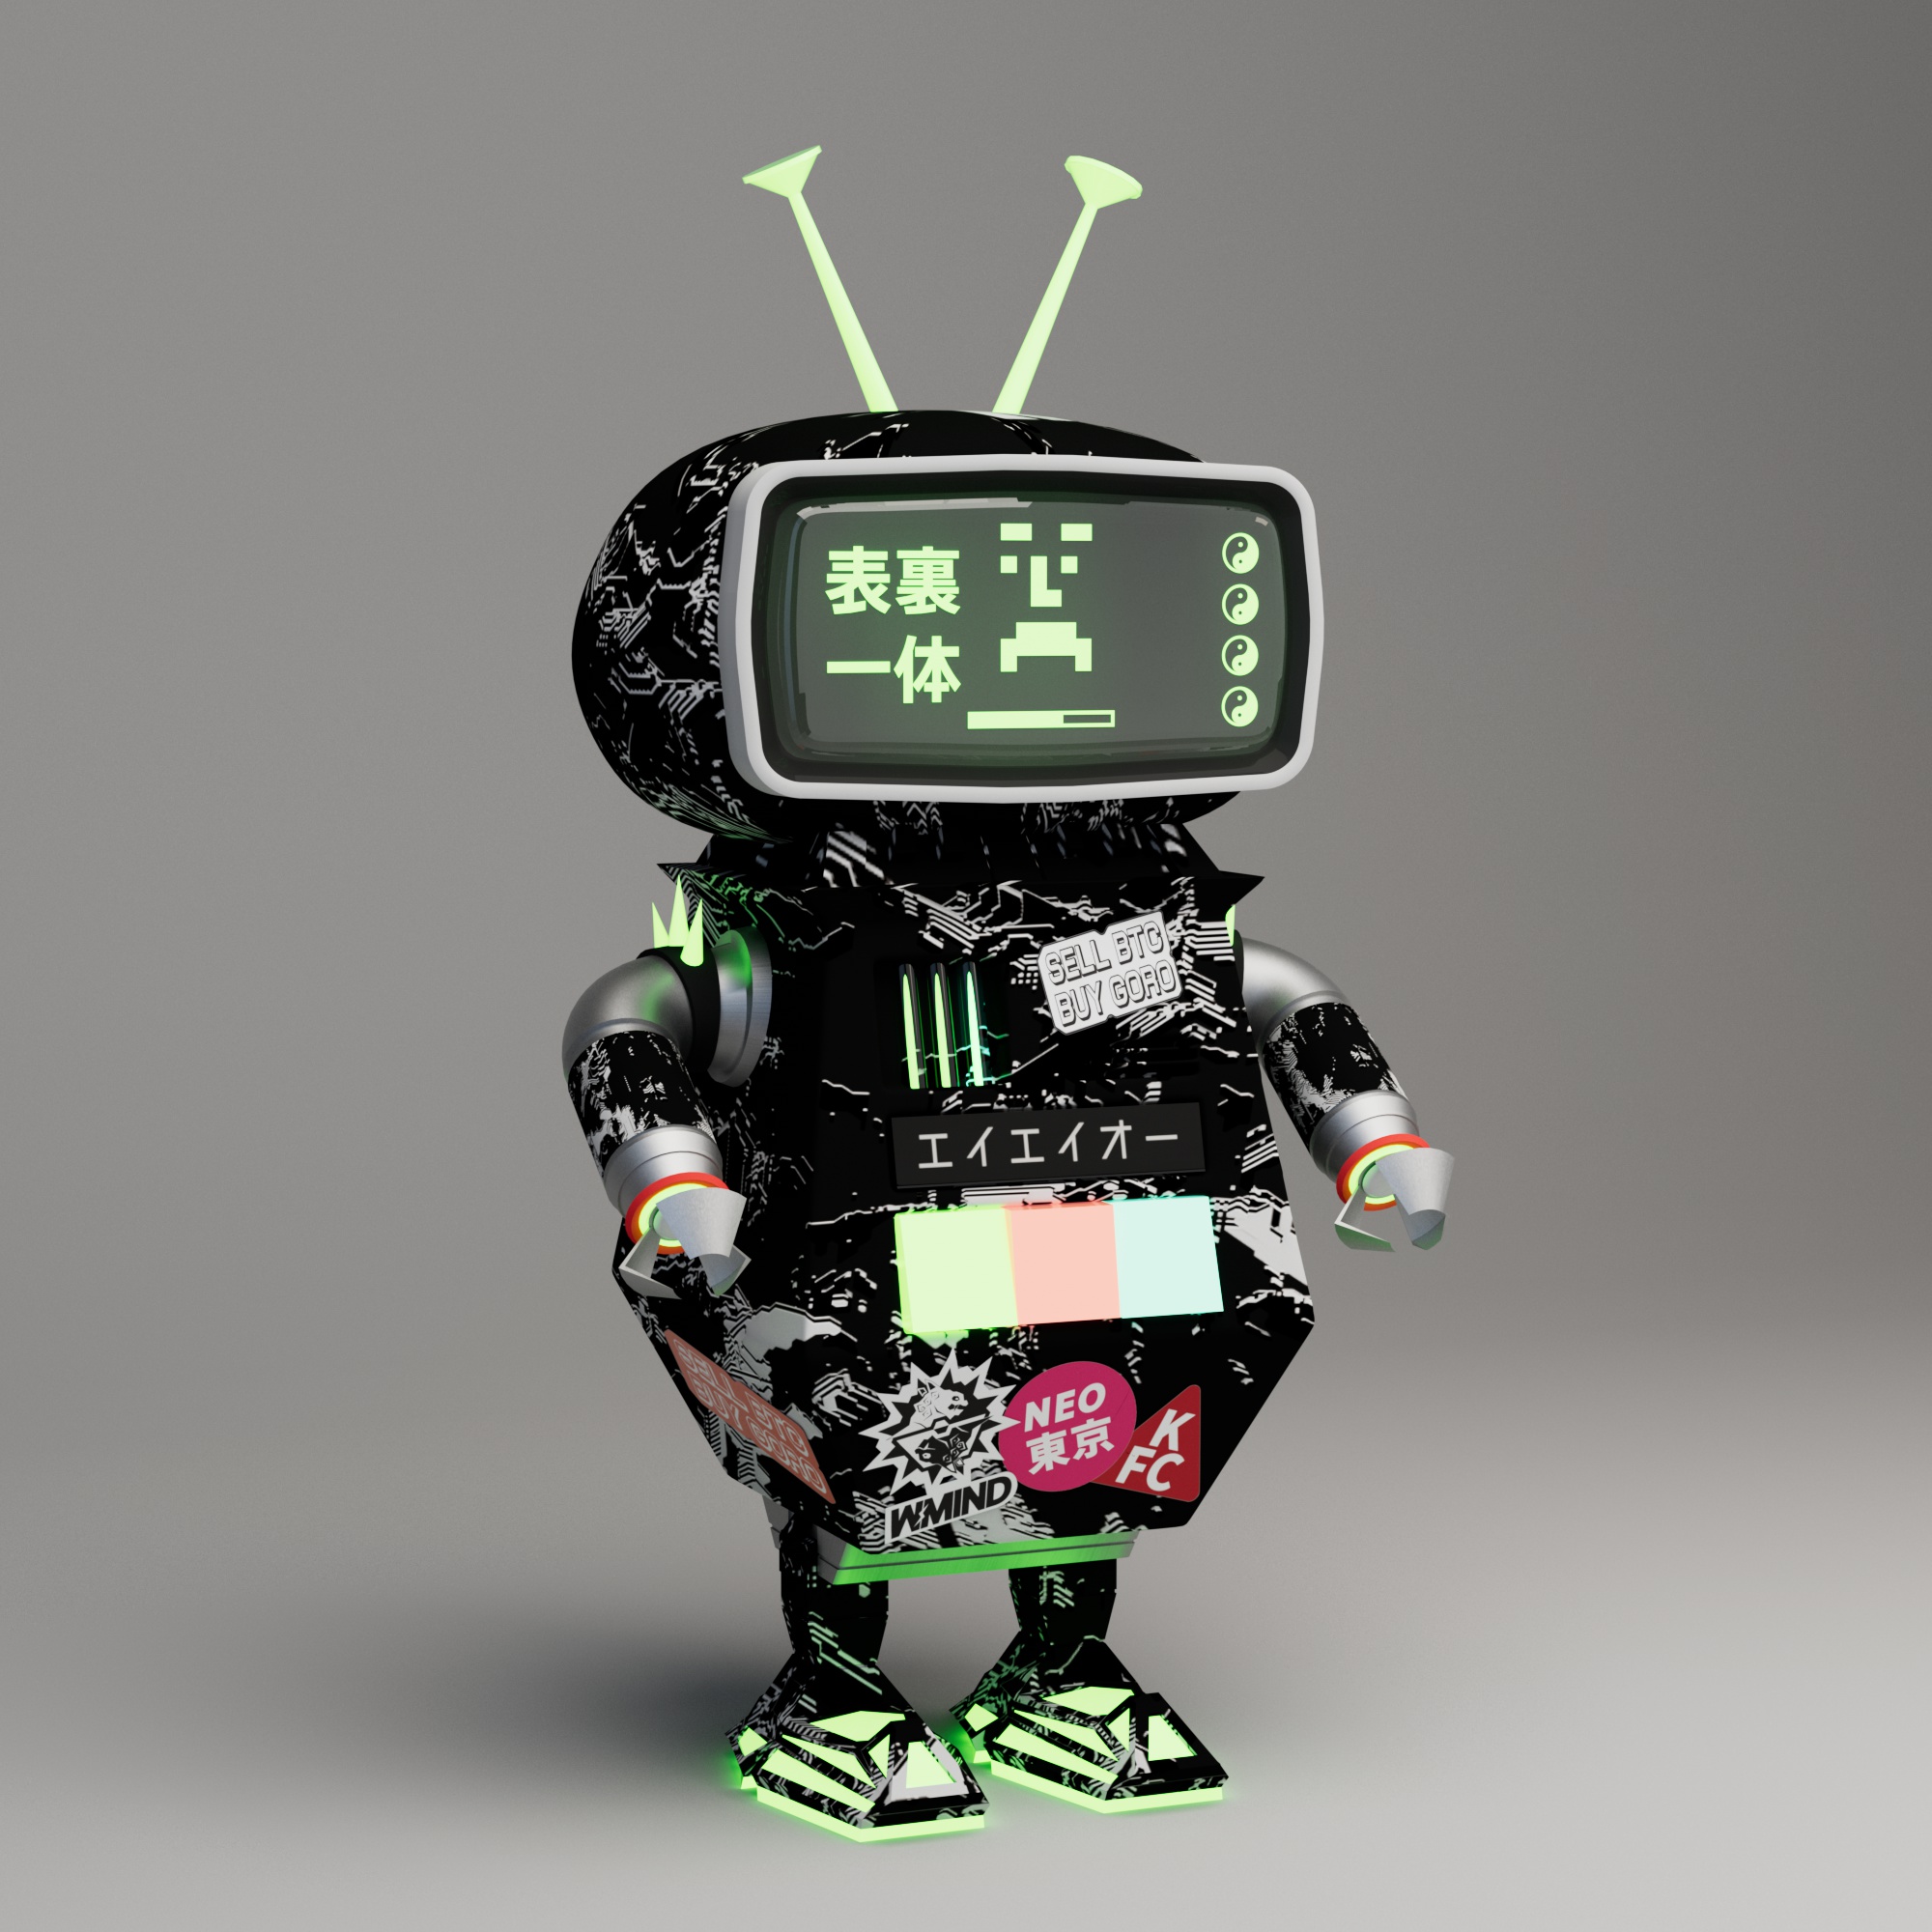 GoroBot #00 Prototype W-MIND